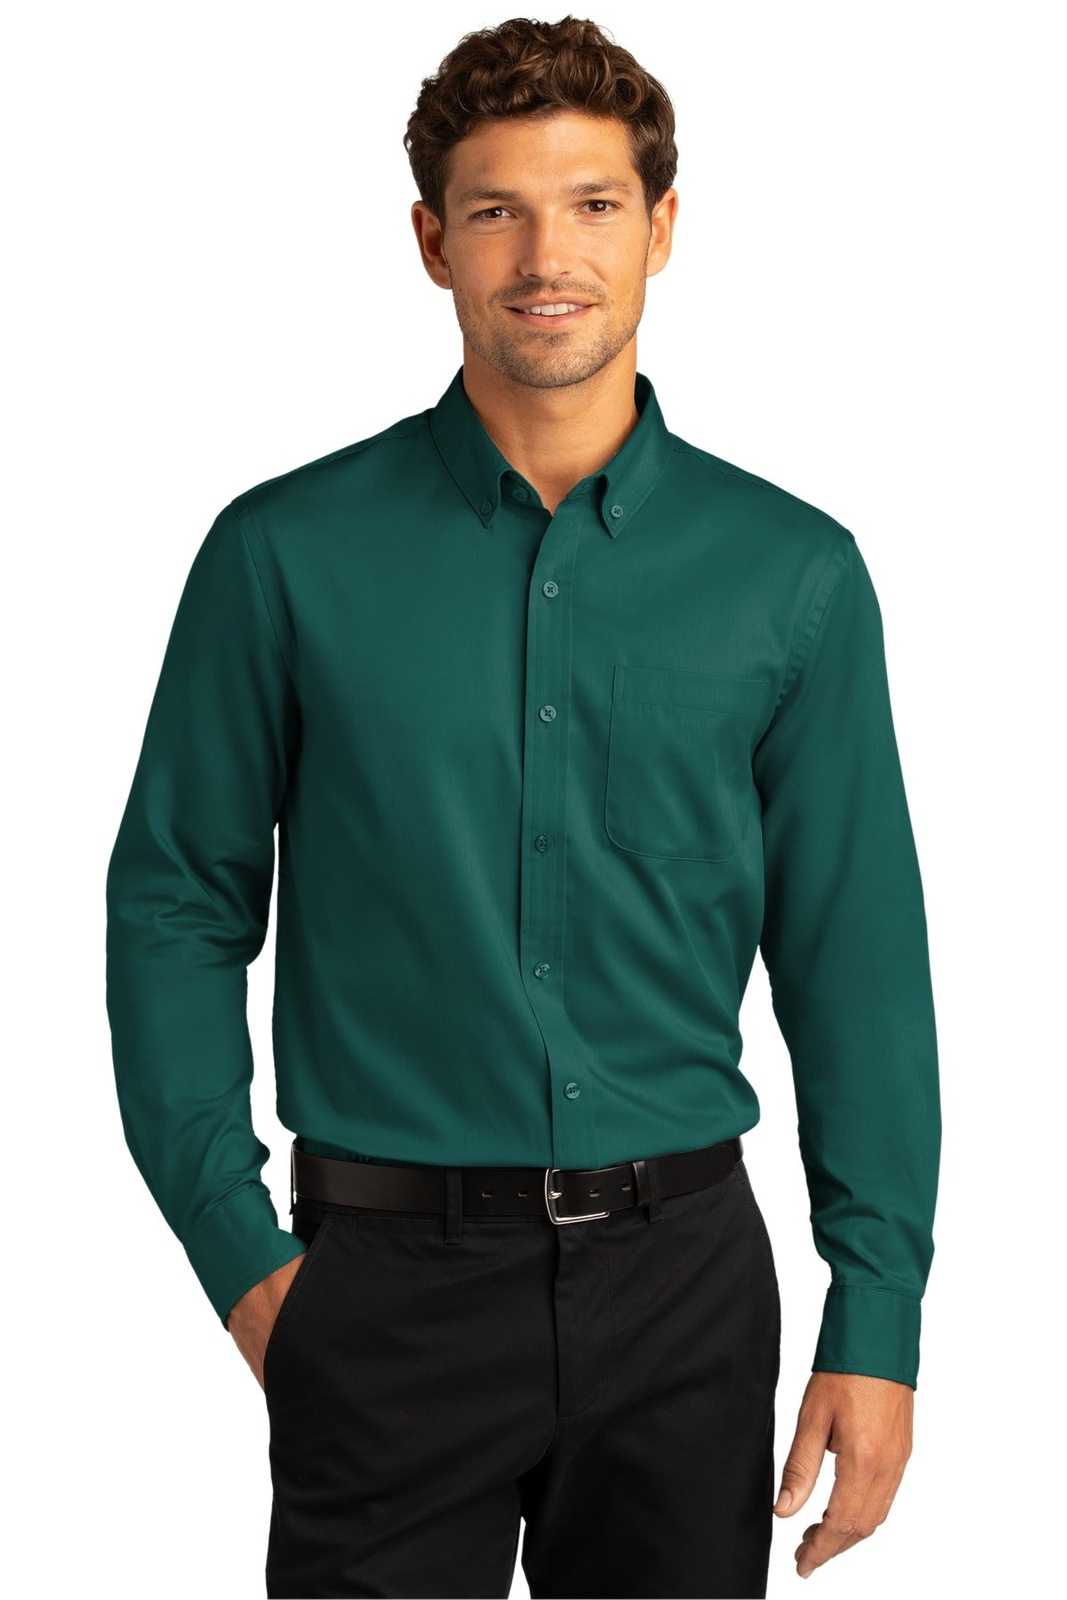 Port Authority W808 Long Sleeve SuperPro React Twill Shirt - Marine Green - HIT a Double - 1